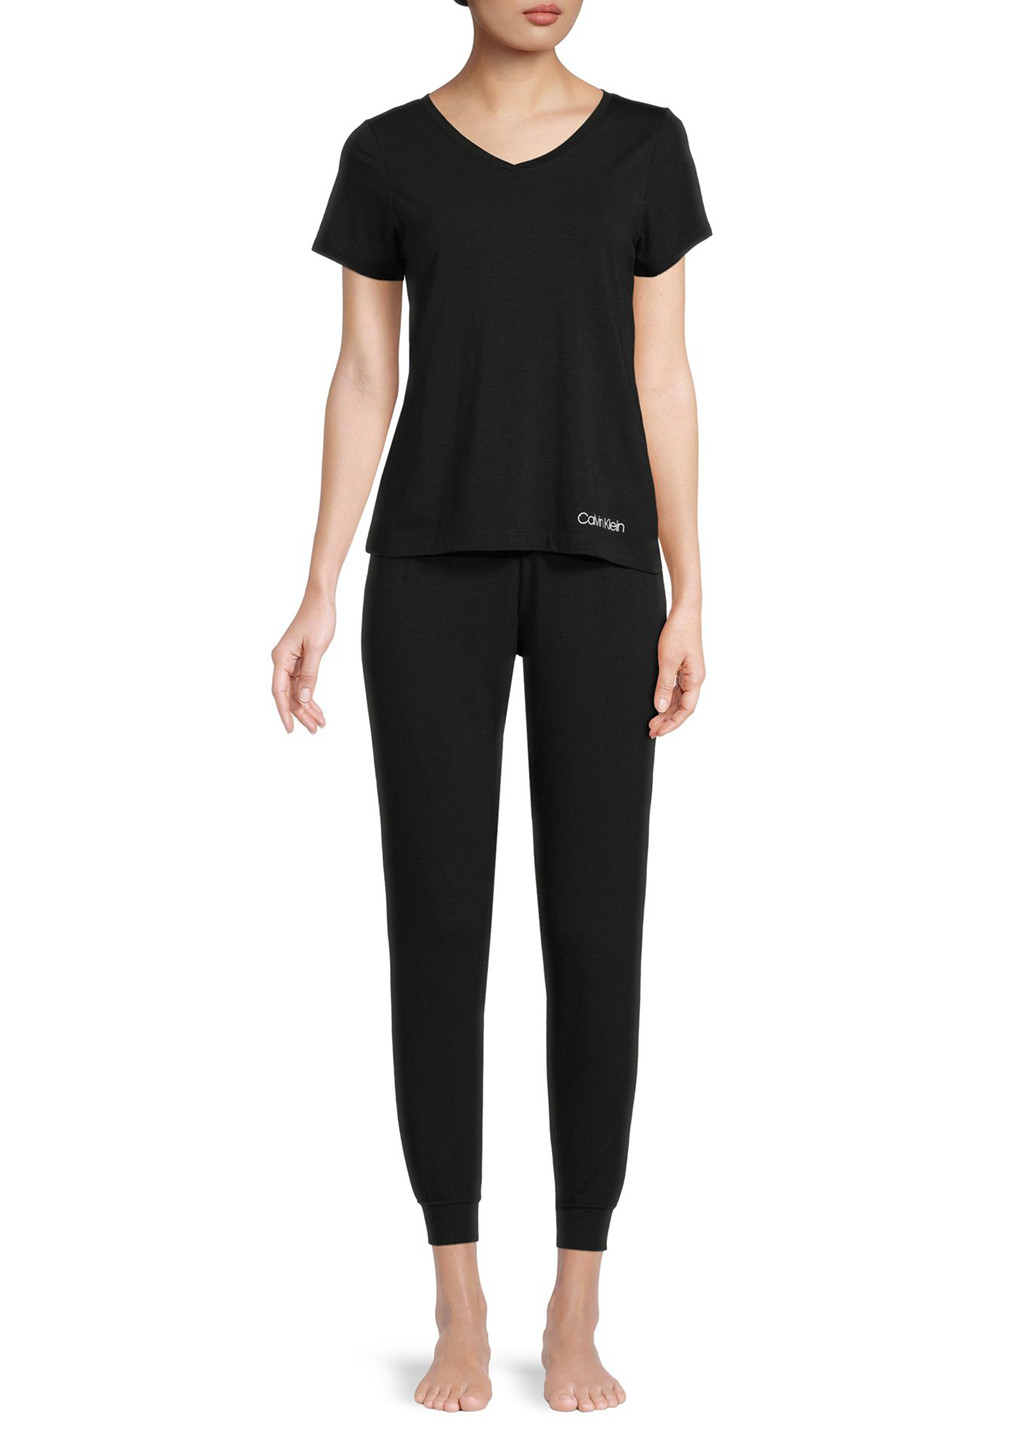 Черная всесезон пижама (футболка, брюки) футболка + брюки Calvin Klein